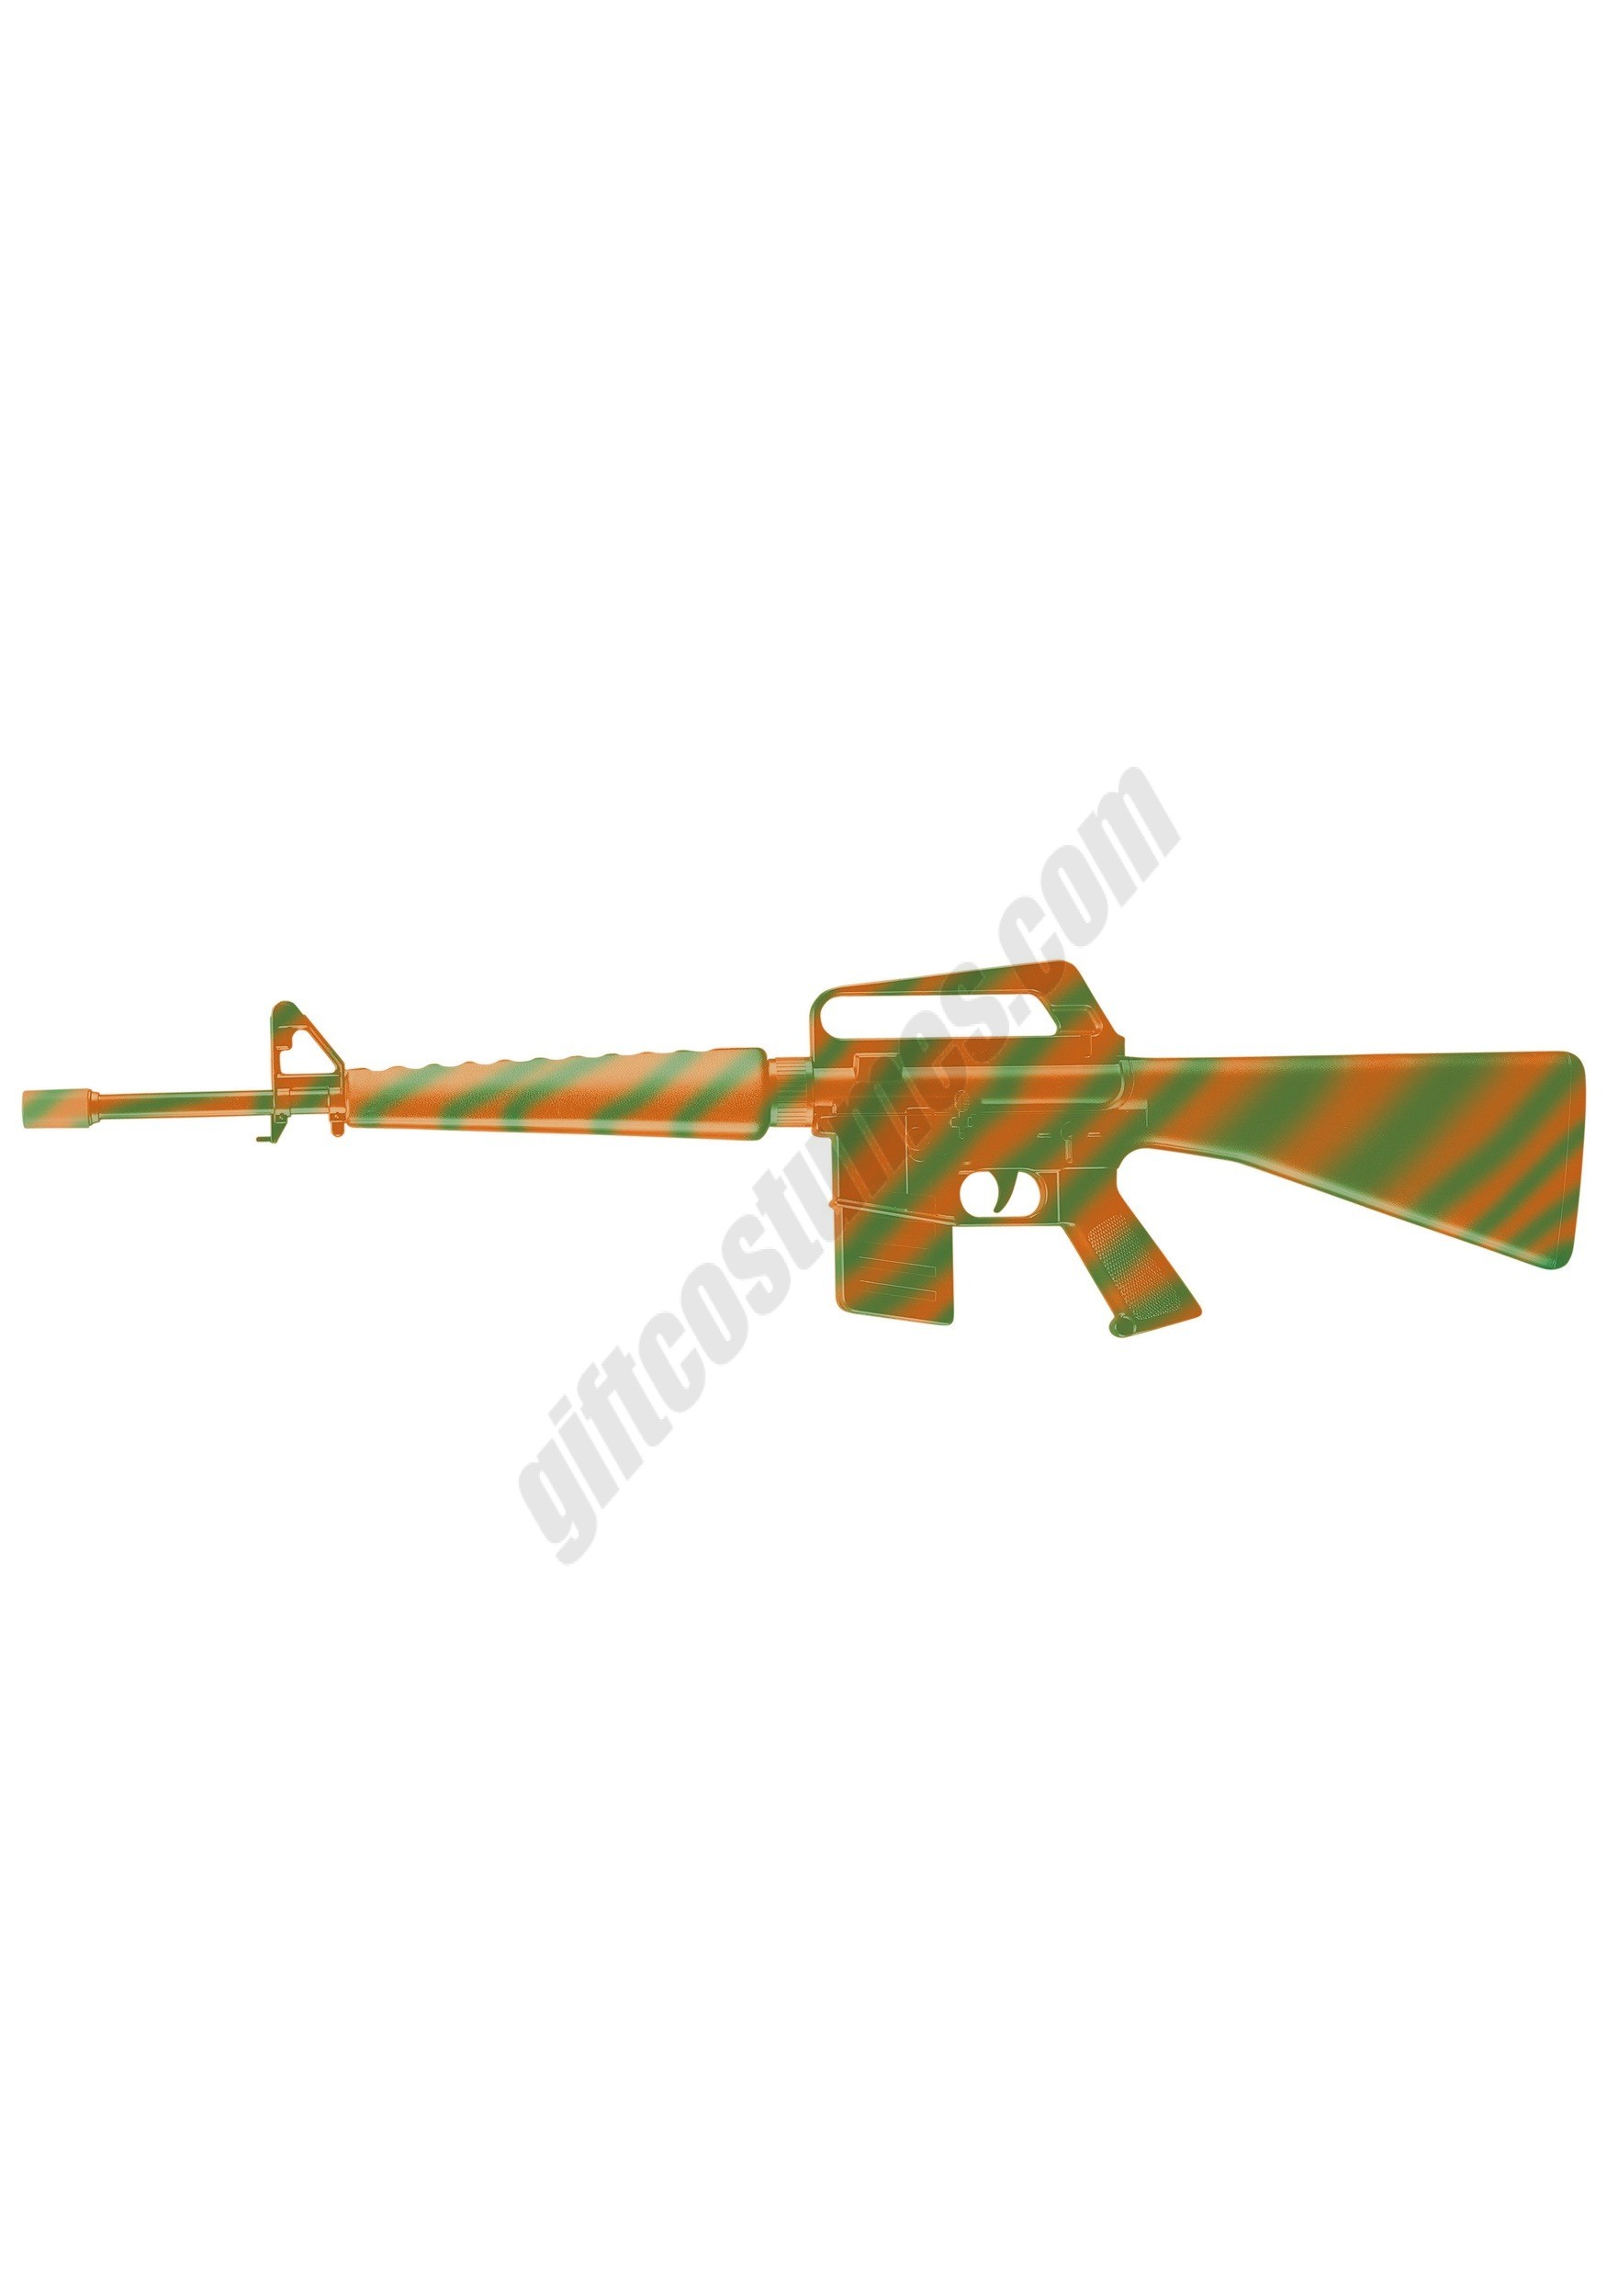 Orange and Green M-16 Machine Gun Promotions - Orange and Green M-16 Machine Gun Promotions